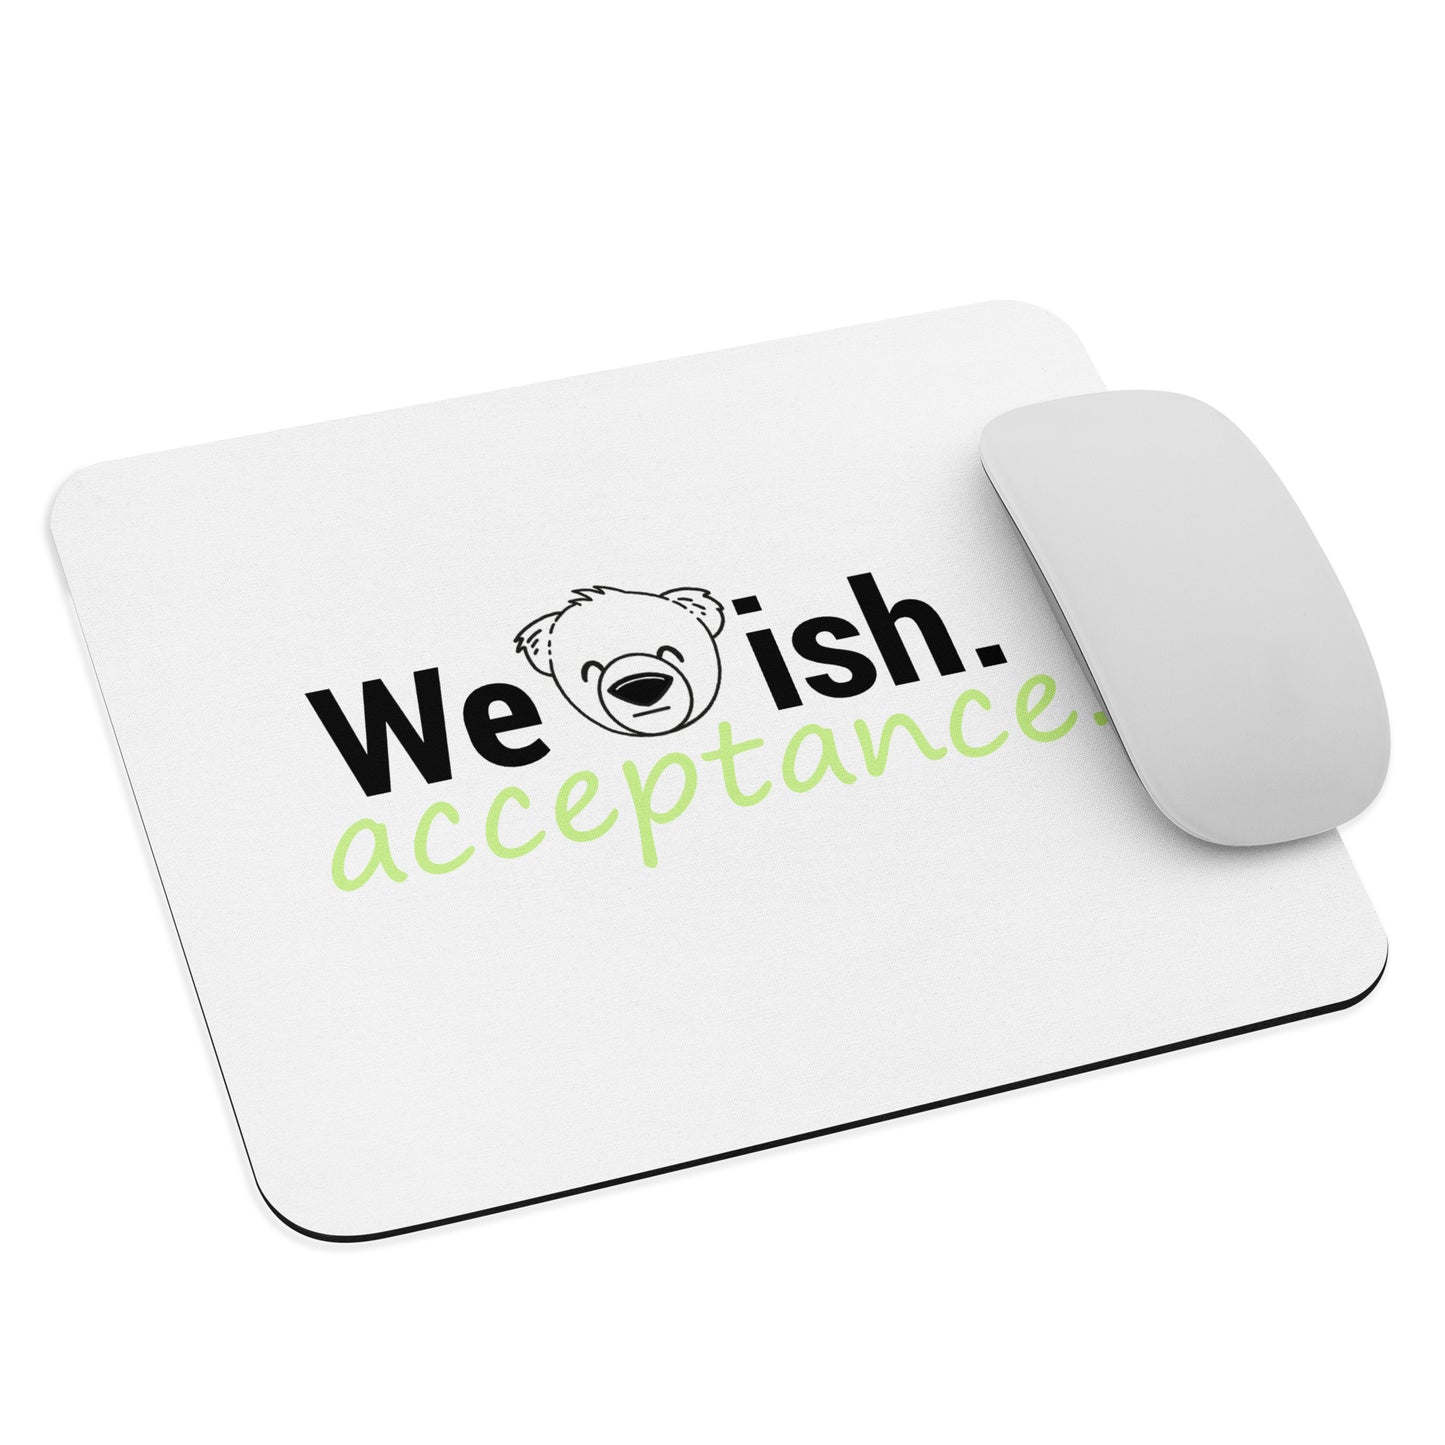 WeBearish Acceptance Mouse Pad